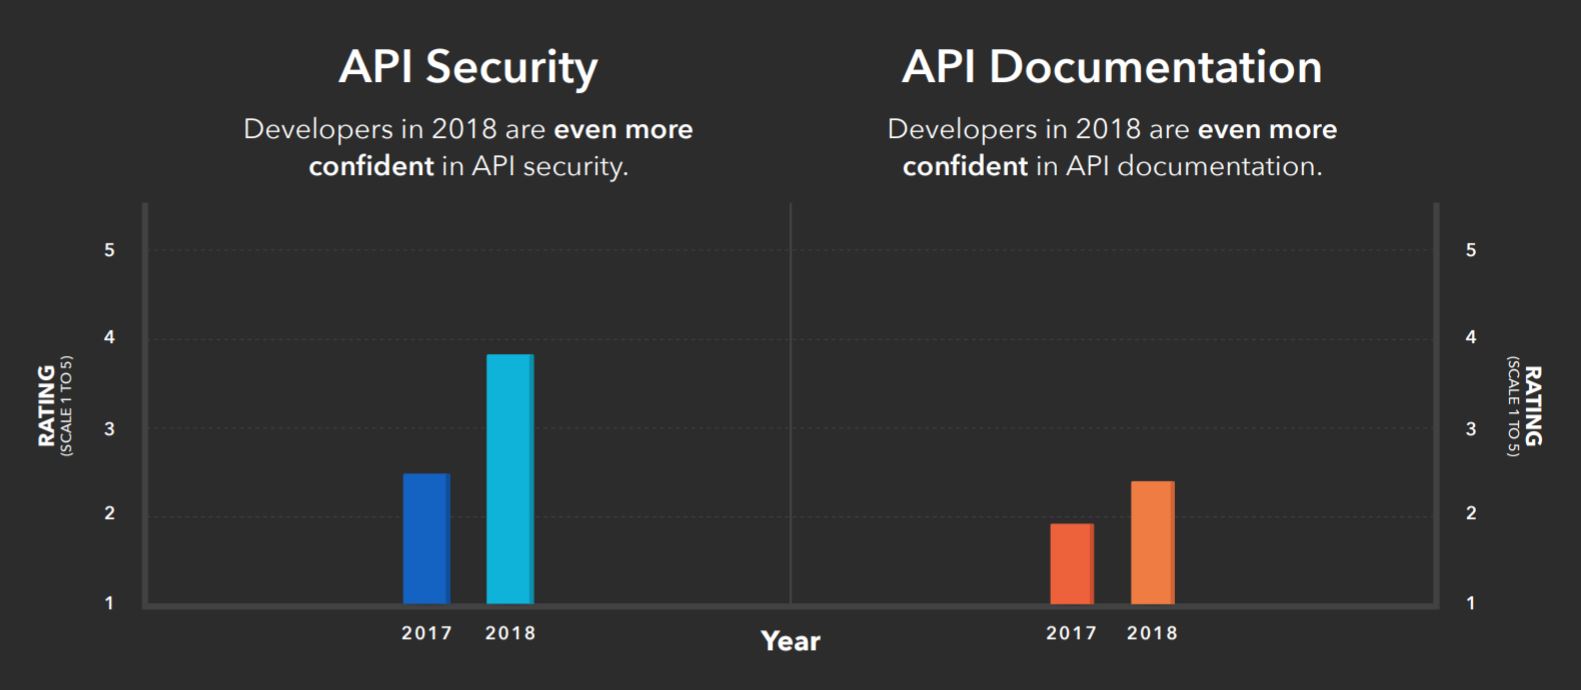 API Security confidence